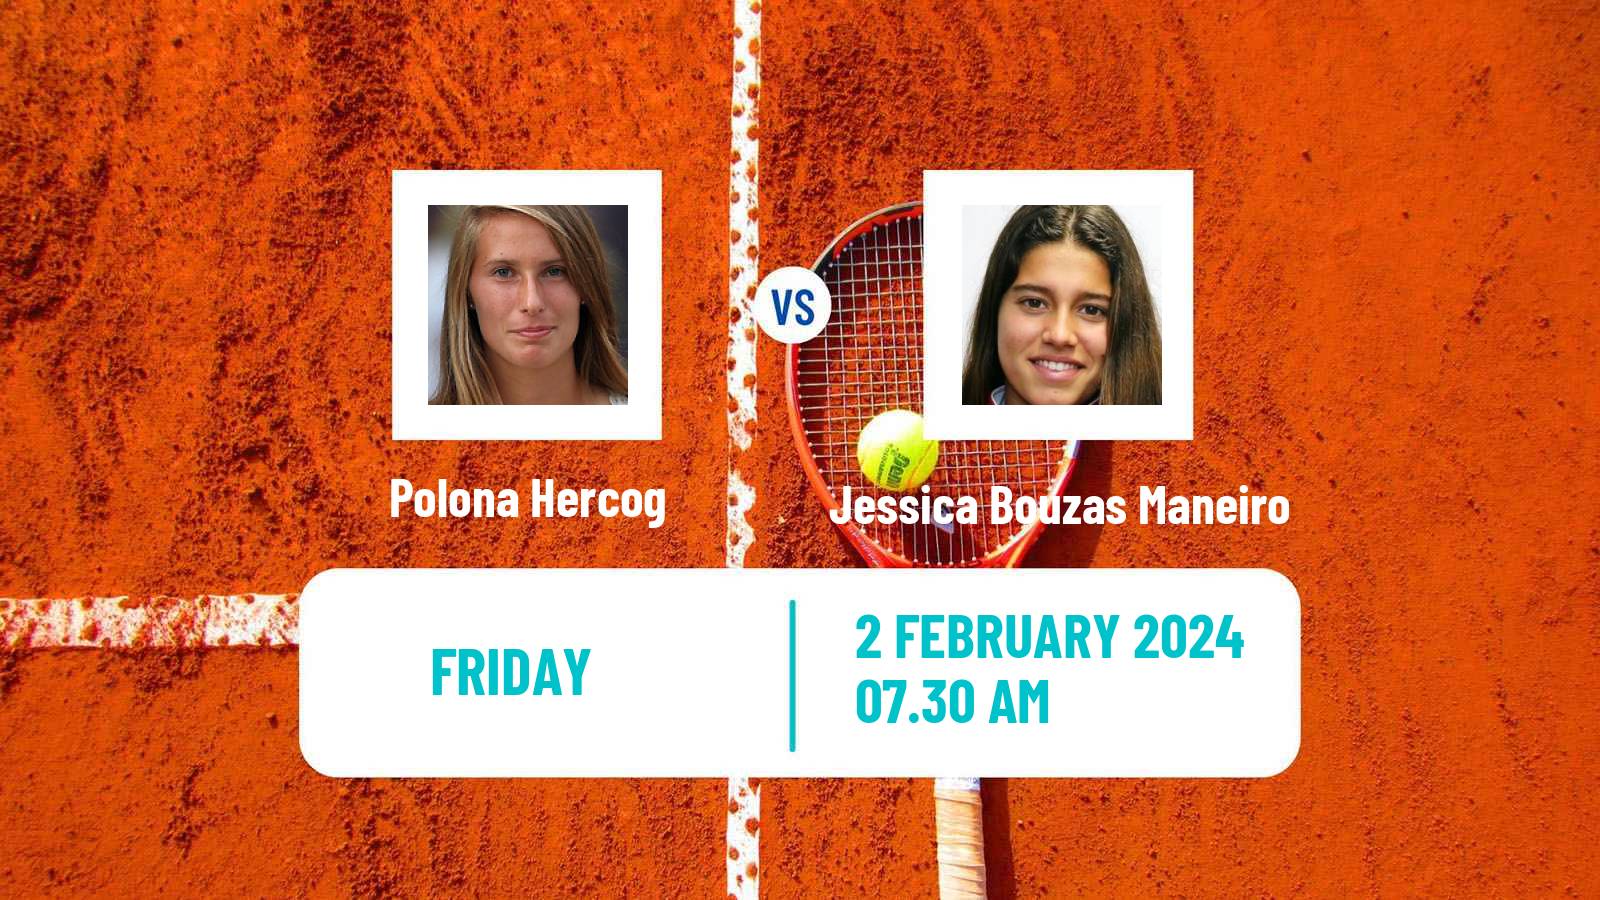 Tennis ITF W50 Porto Women Polona Hercog - Jessica Bouzas Maneiro